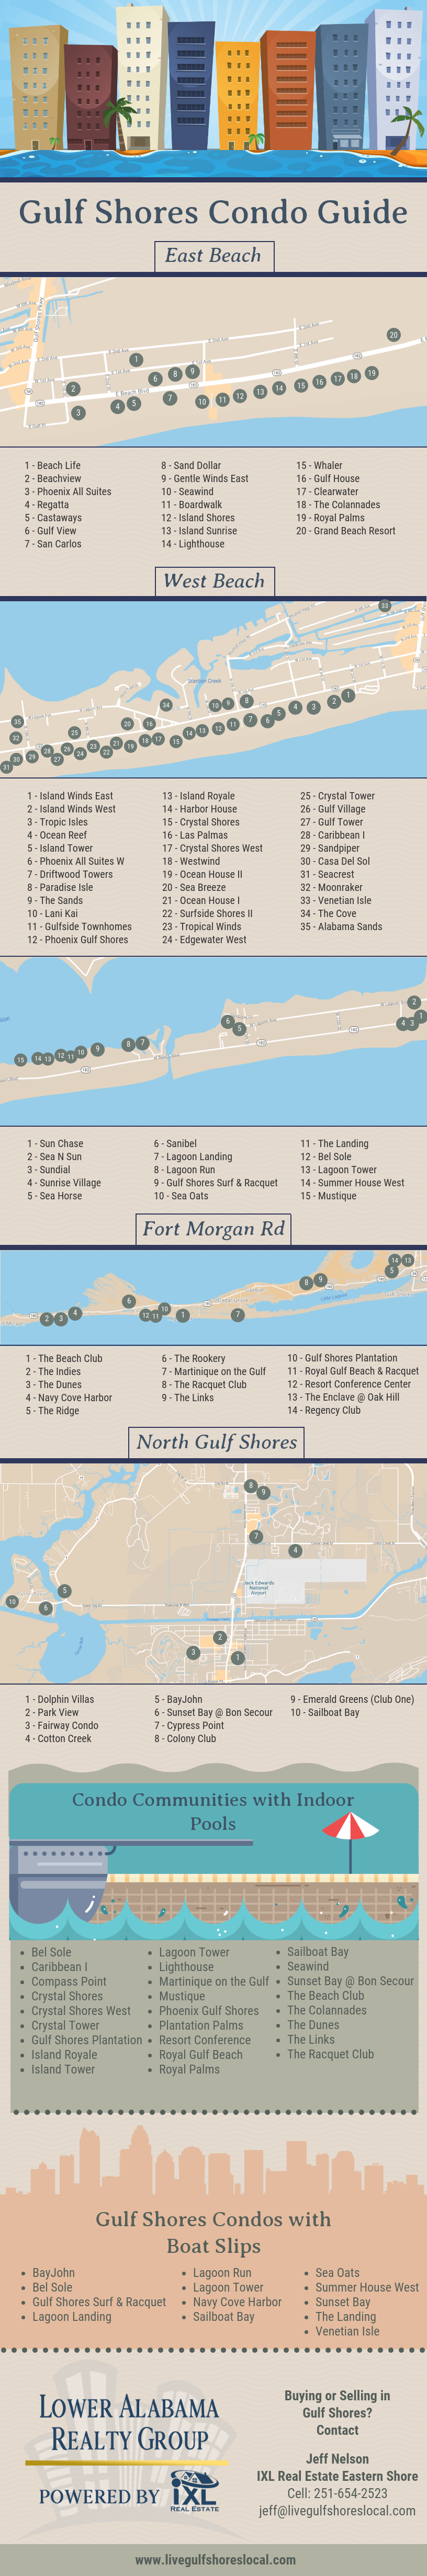 Infographic - Gulf Shores Condo Guide